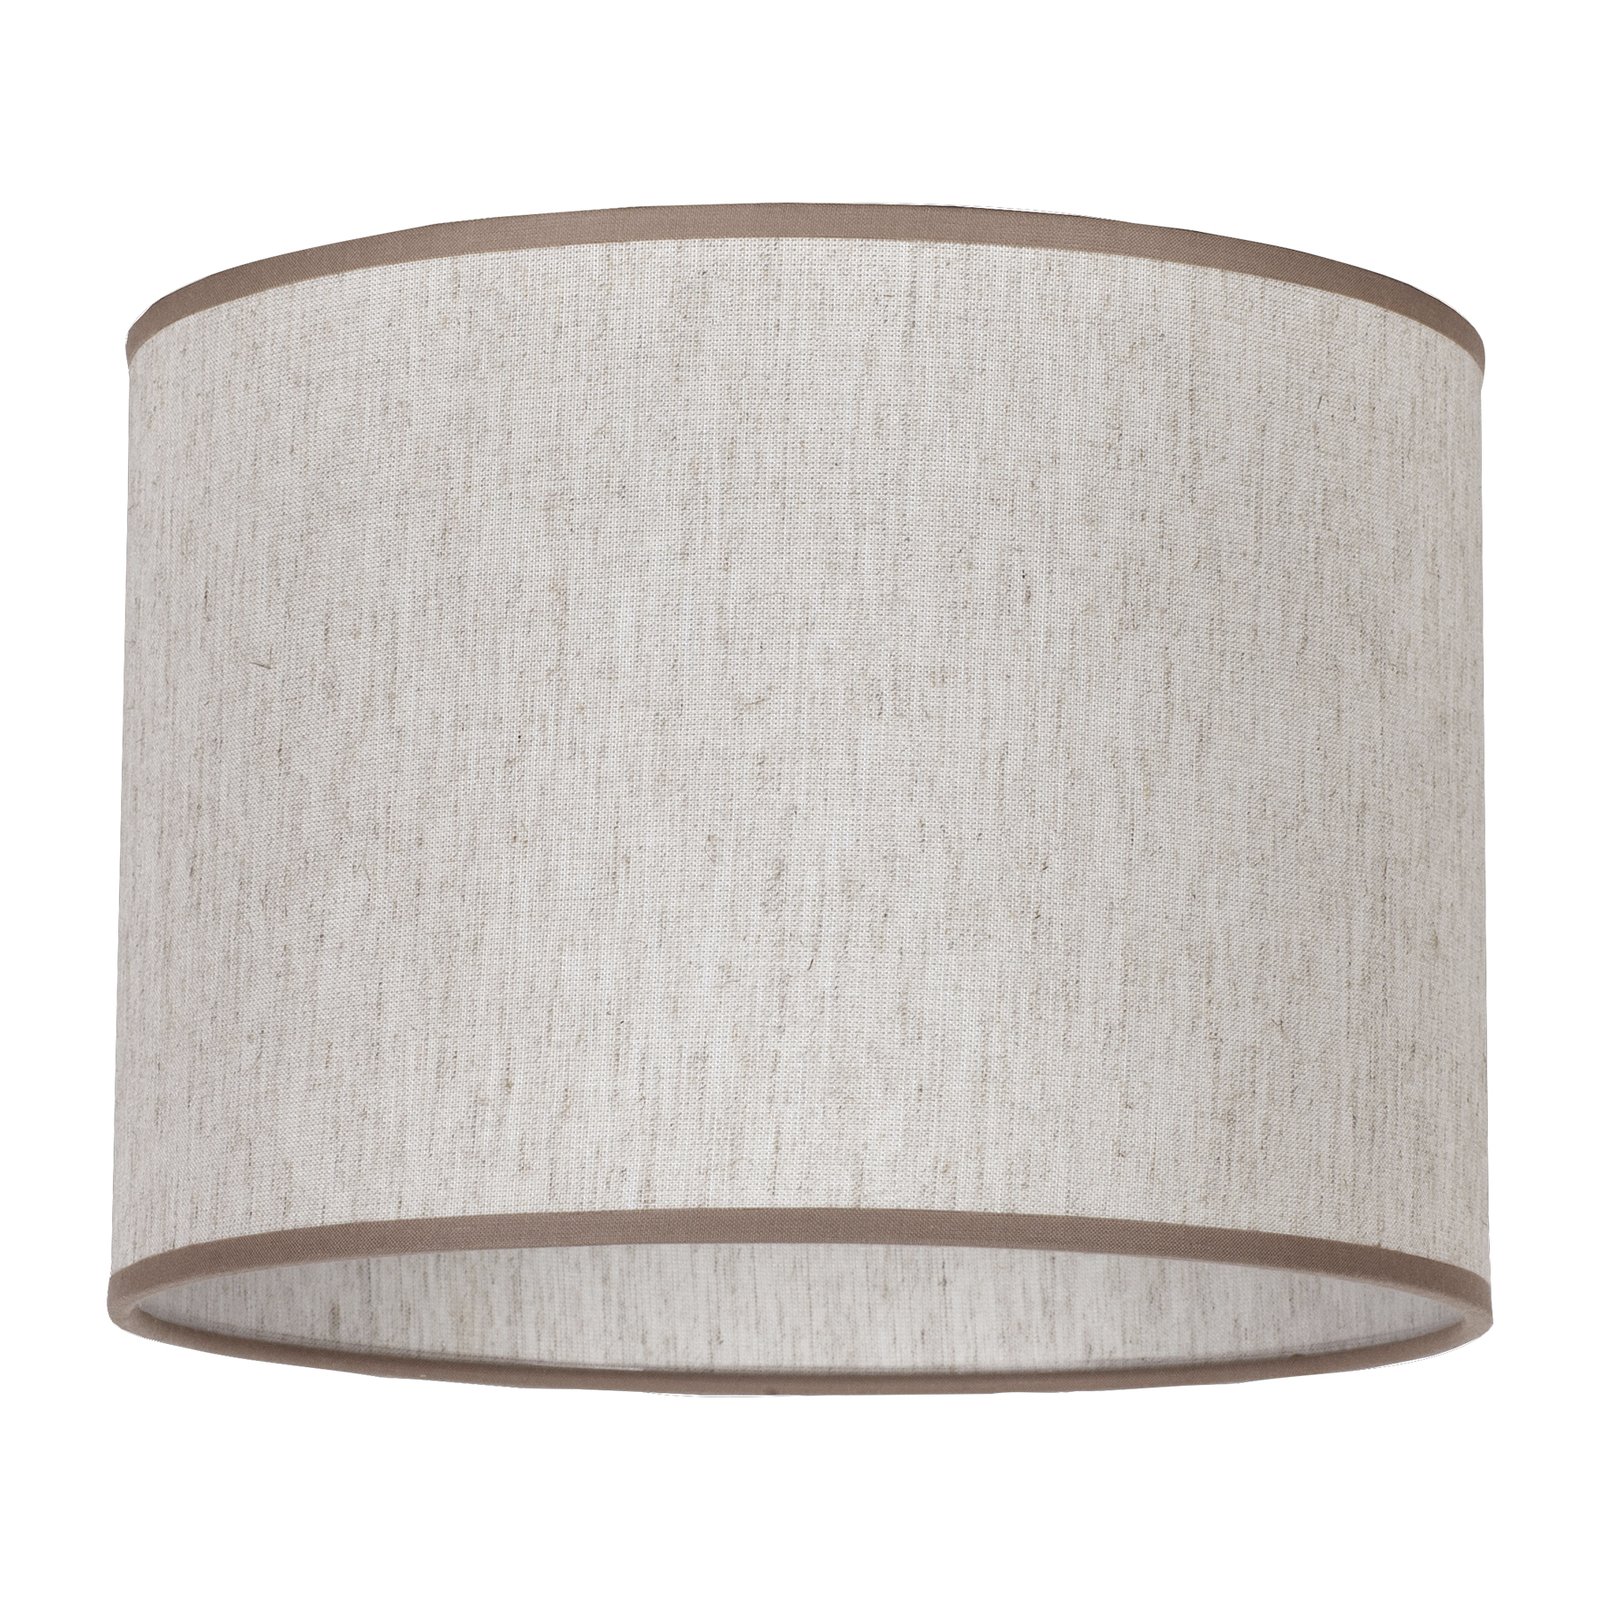 Roller lampshade ecru/beige Ø 25 cm height 18 cm